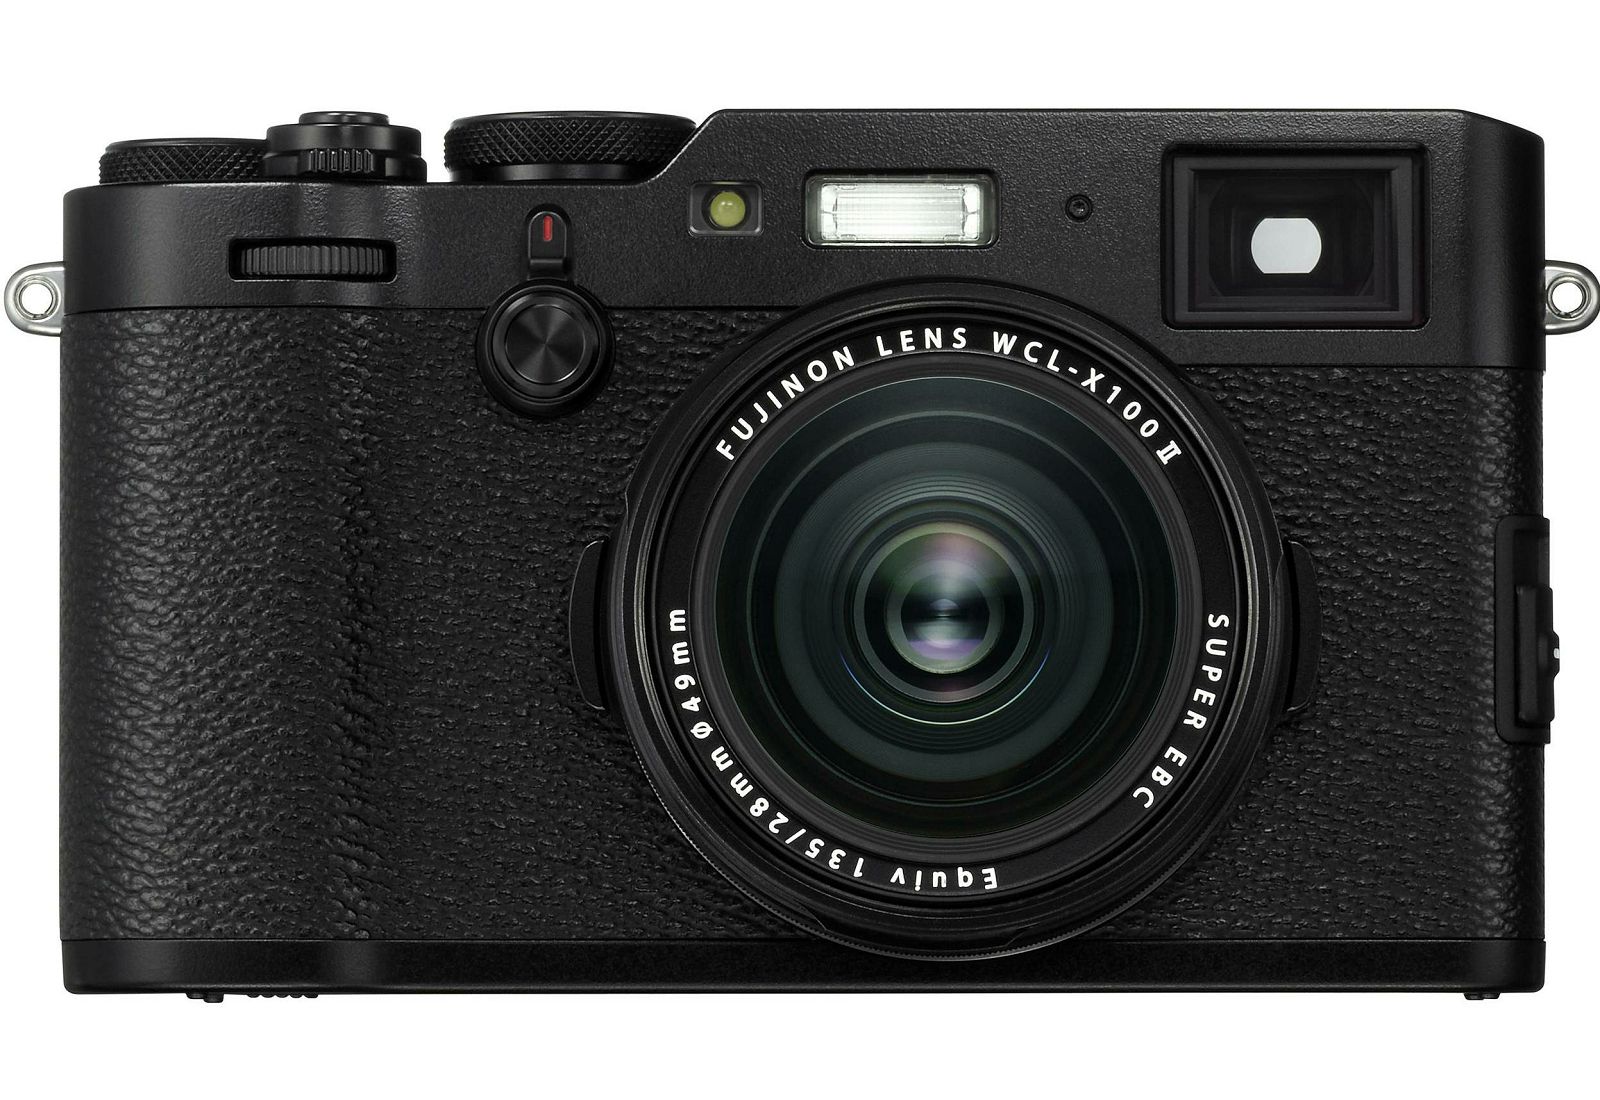 Fujifilm WCL-X100 II Black 0.8x Wide Angle Conversion Lens širokokutni konverter predleća za fotoaparat Fuji X100F, X100S, X100T